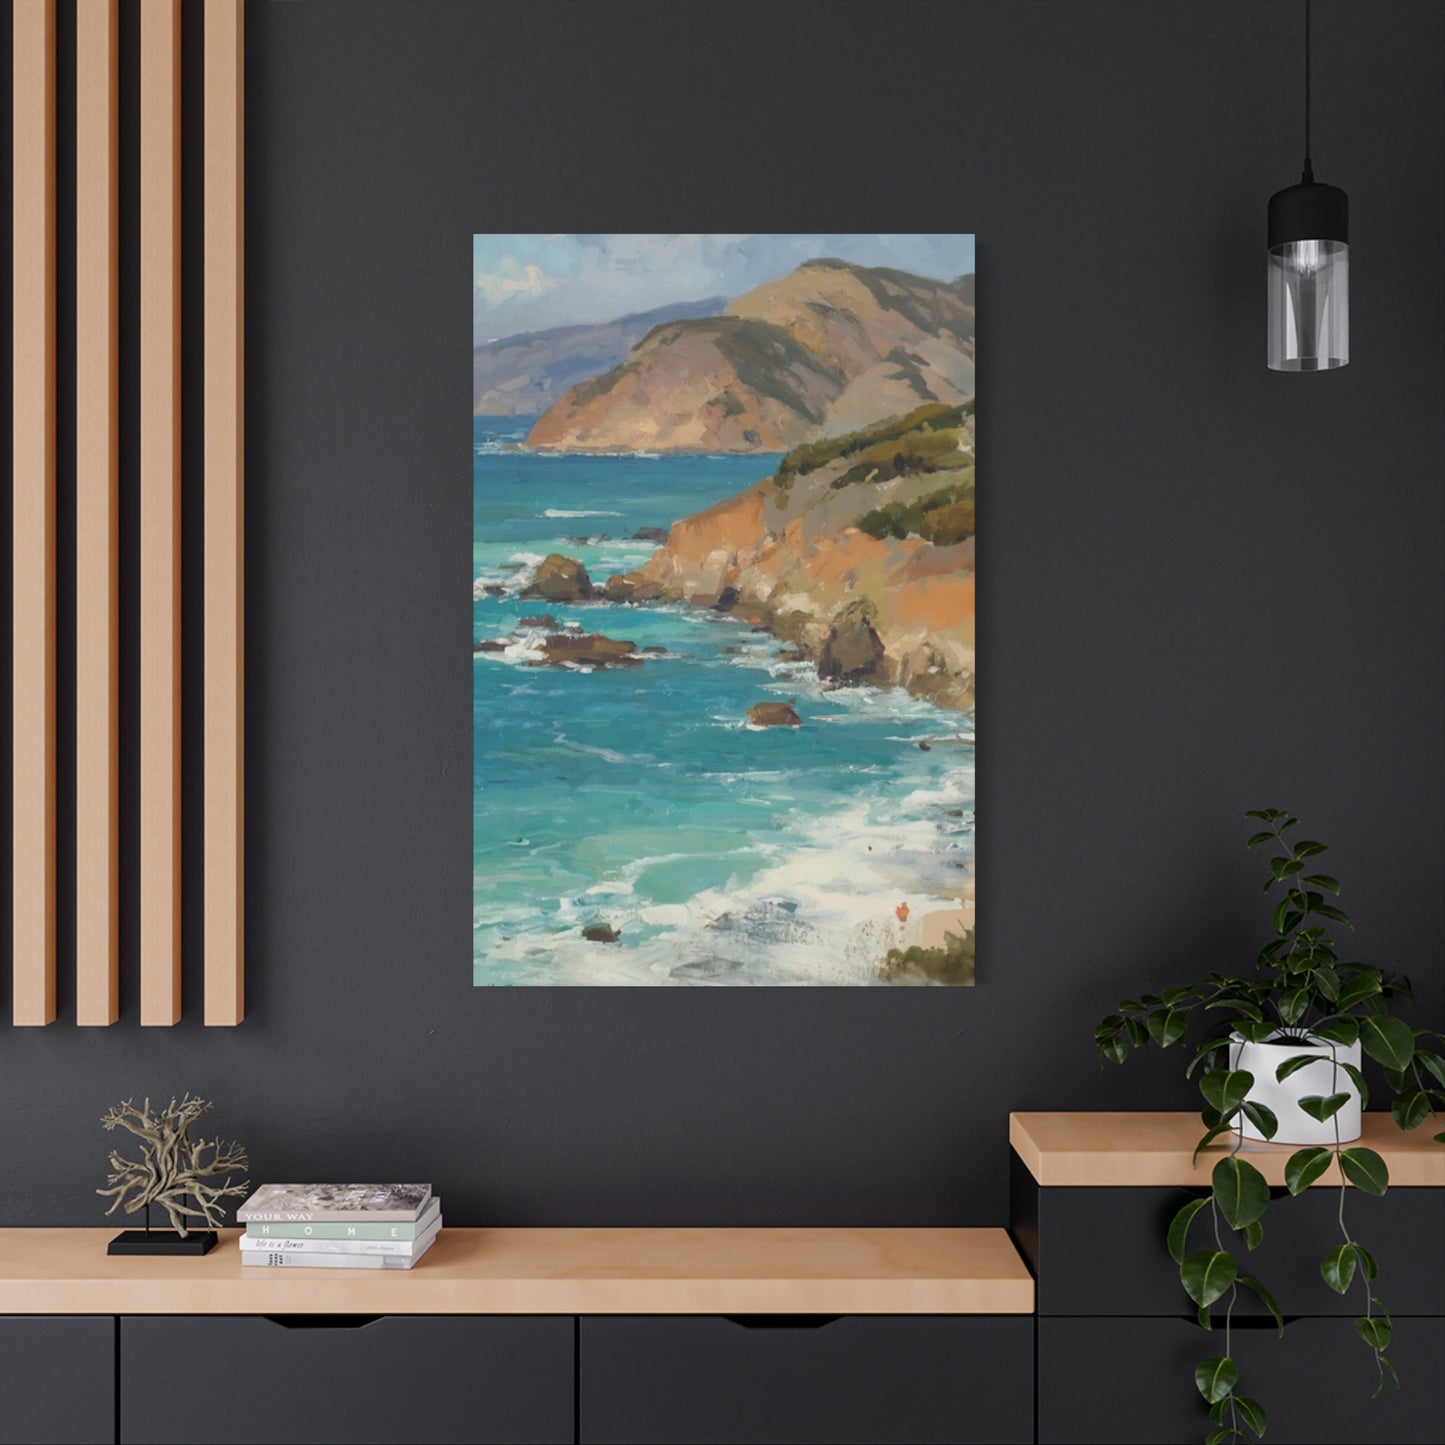 Sea View Wall Art & Canvas Prints